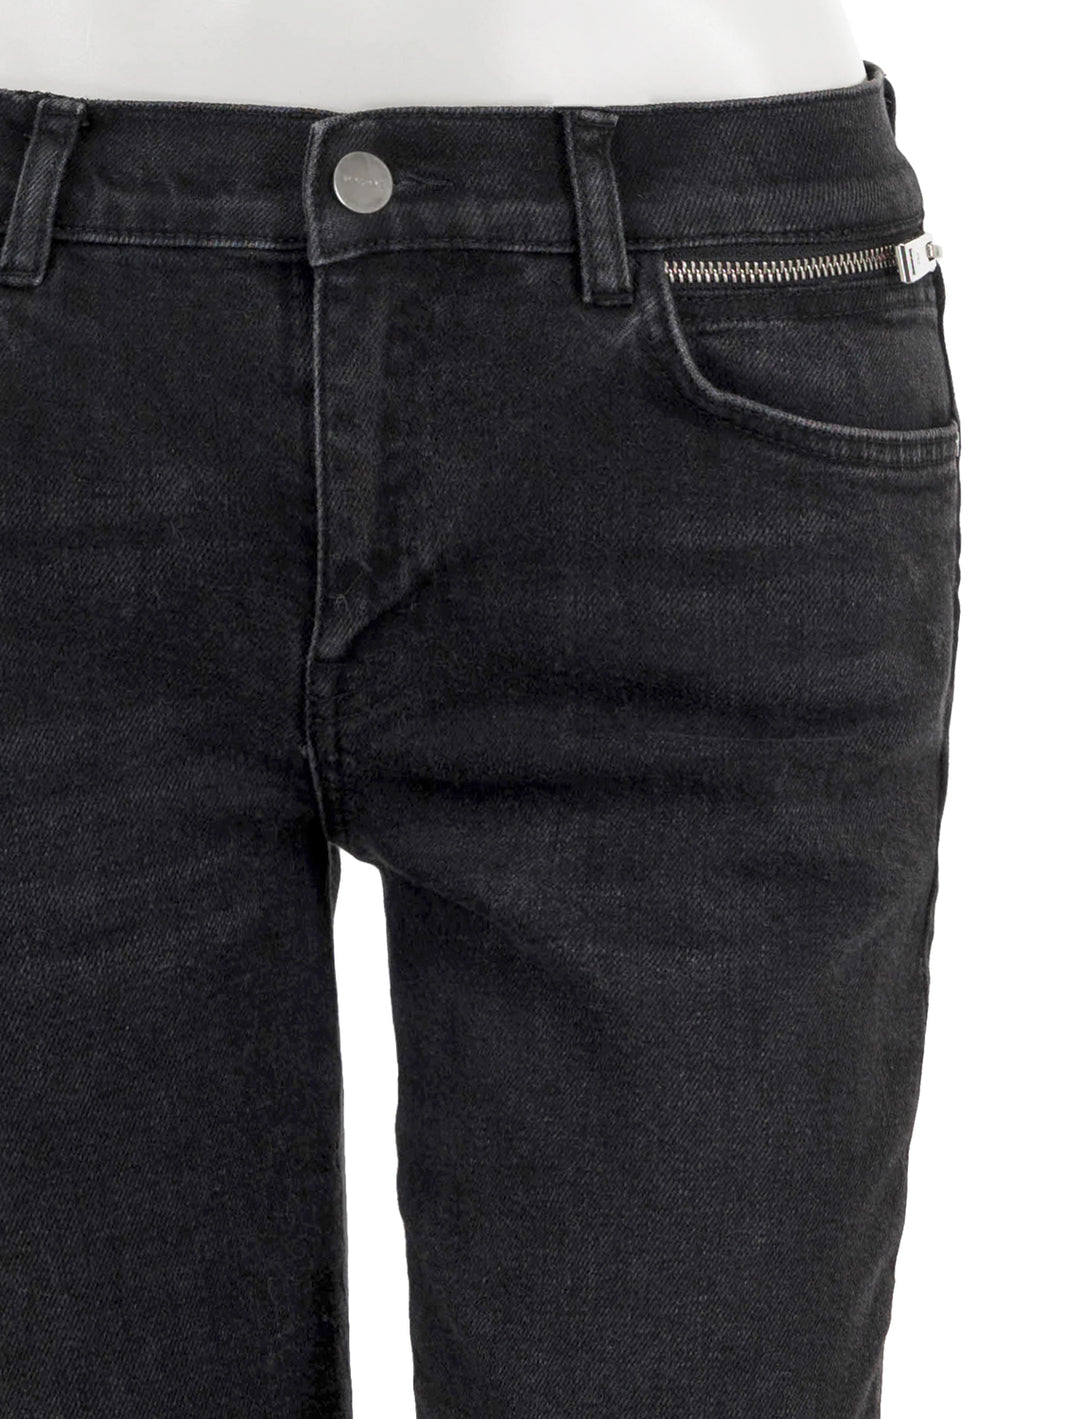 Close-up view of Anine Bing's jax jean in smoke black.